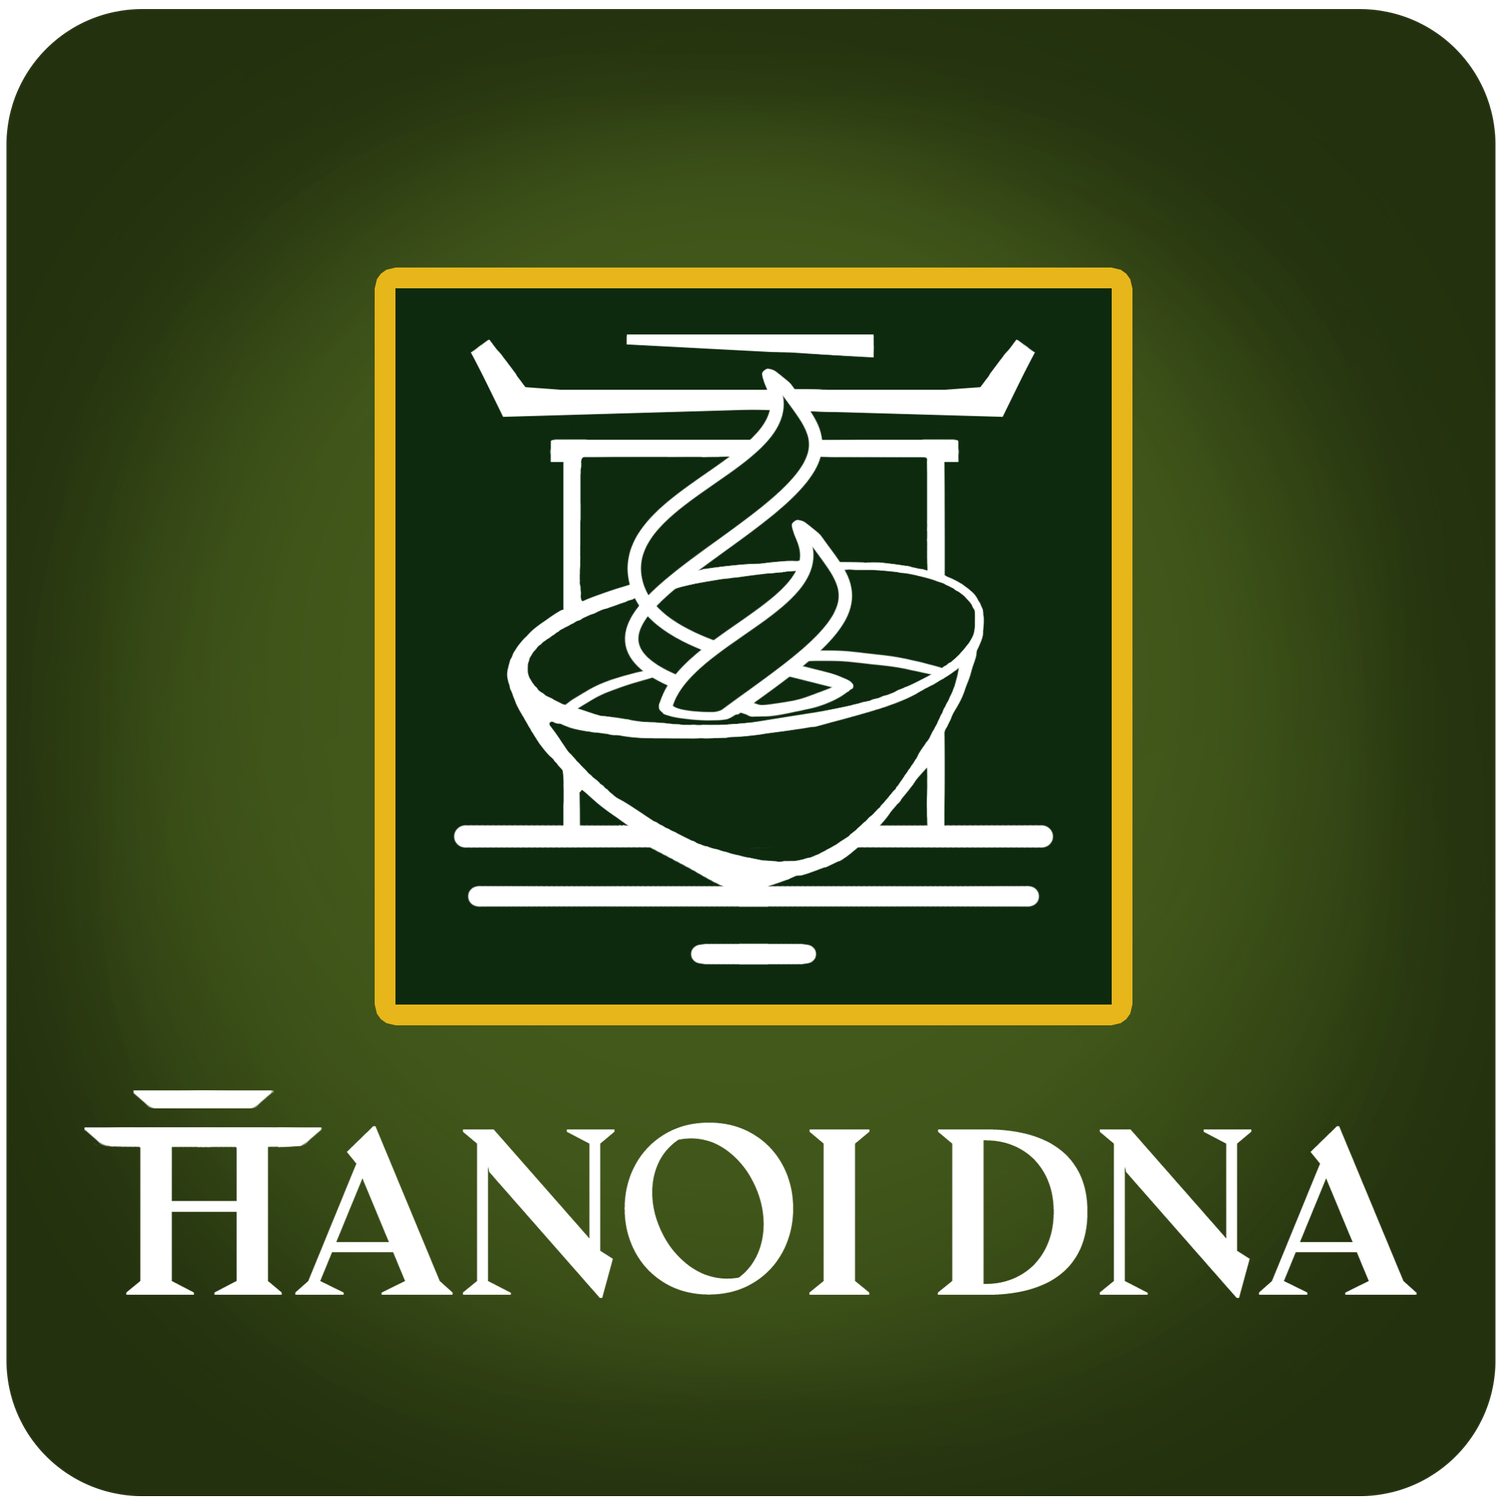 Hanoi DnA